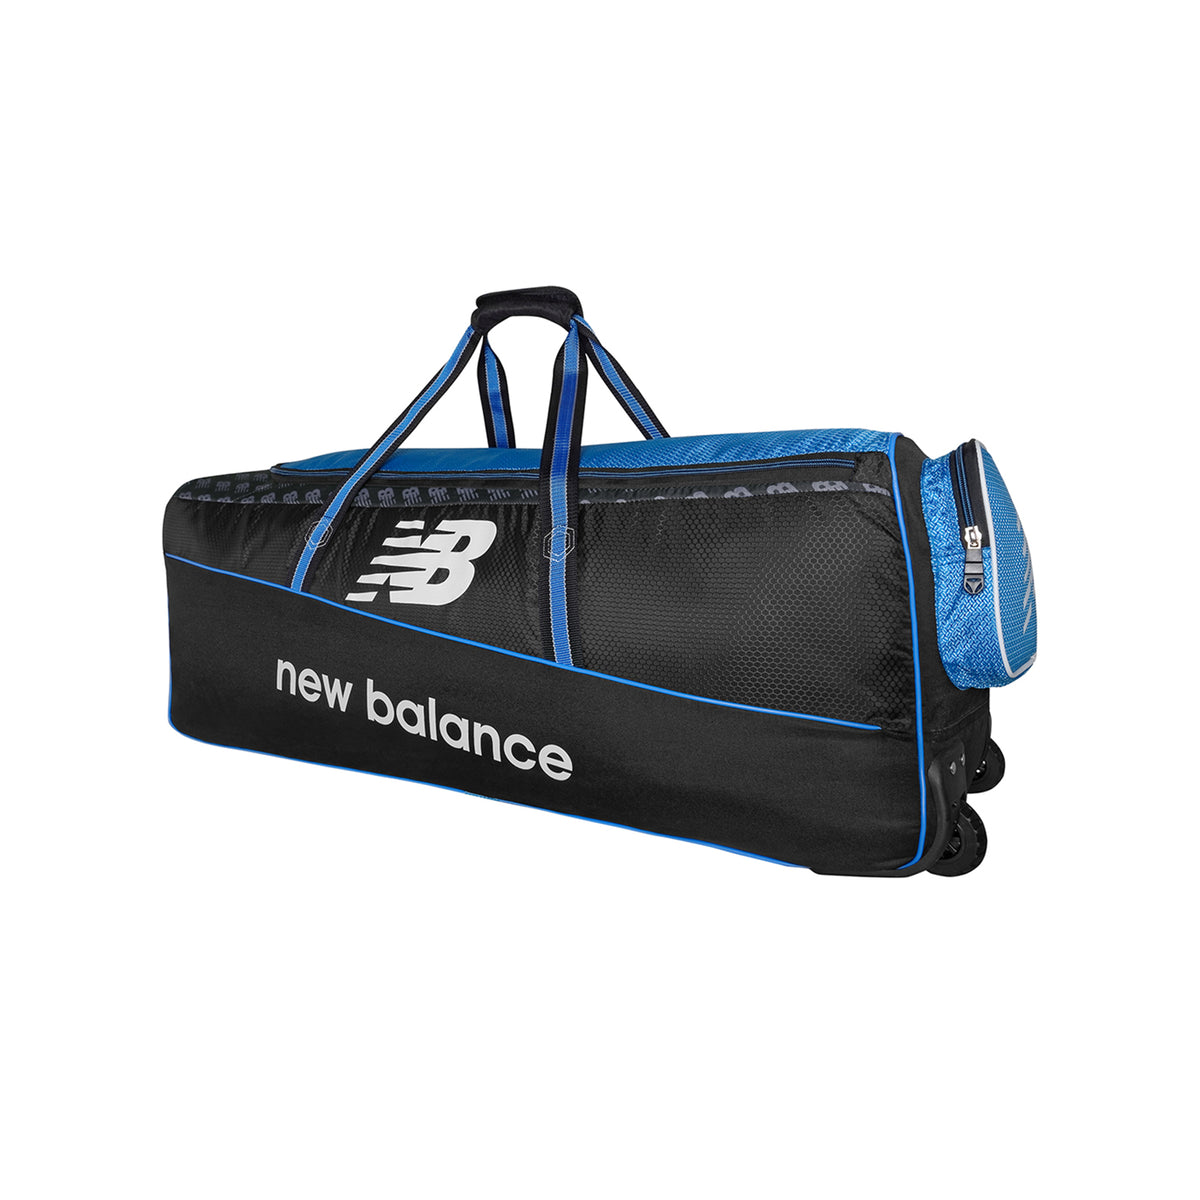 New Balance Burn 670 Wheelie Cricket Bag